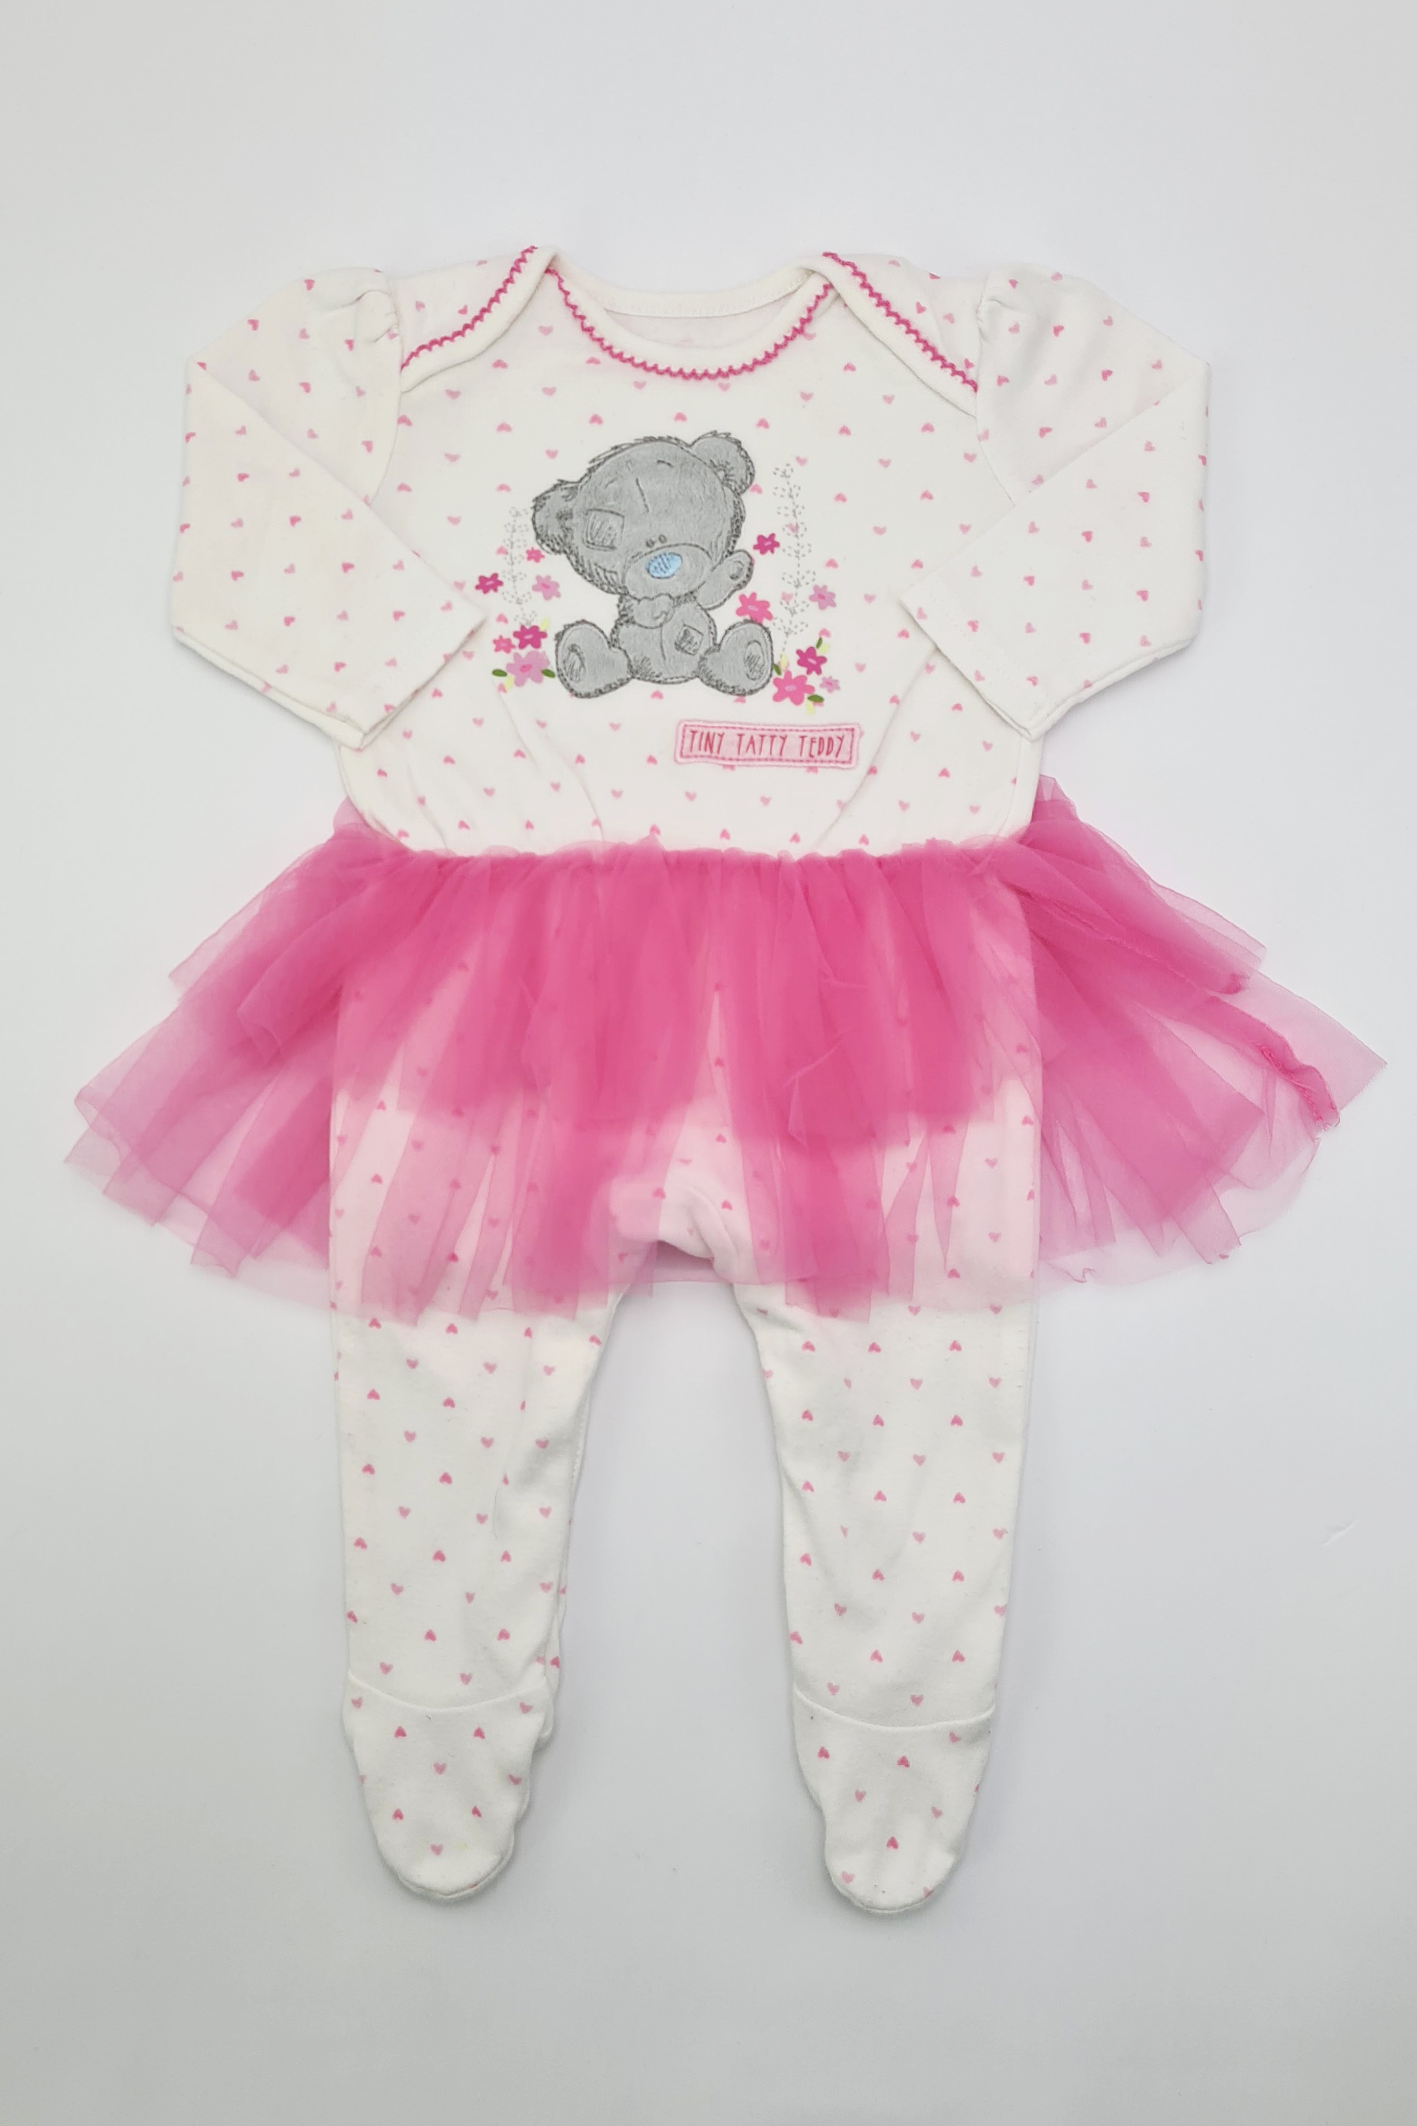 Newborn - 10lbs 'Hug Me' Pink Bodysuit (Primark) –